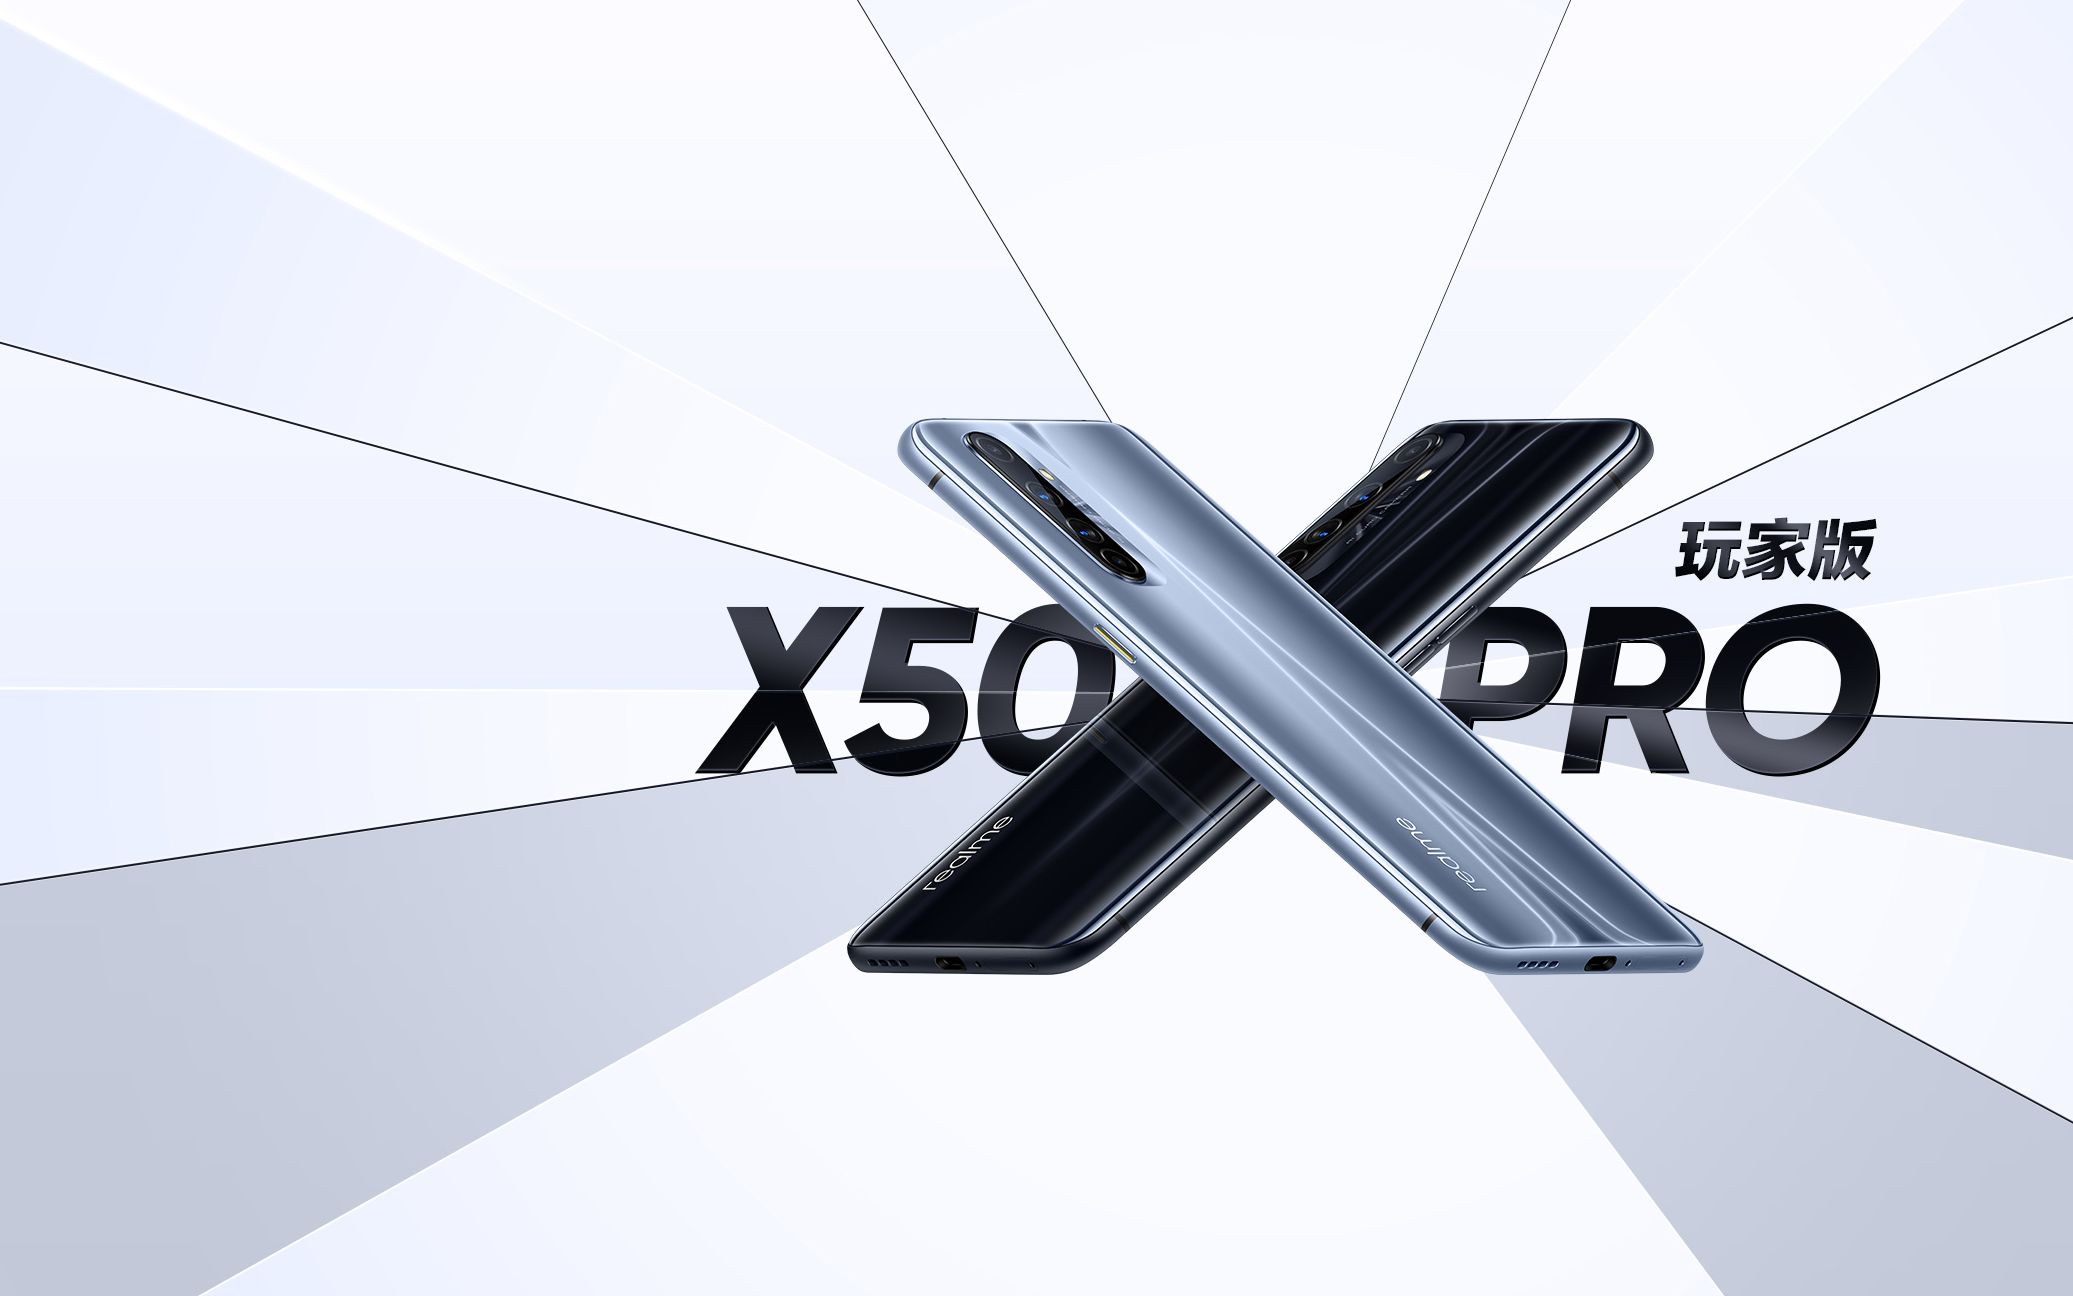 realmex50pro玩家版手机新品发布会全程回顾